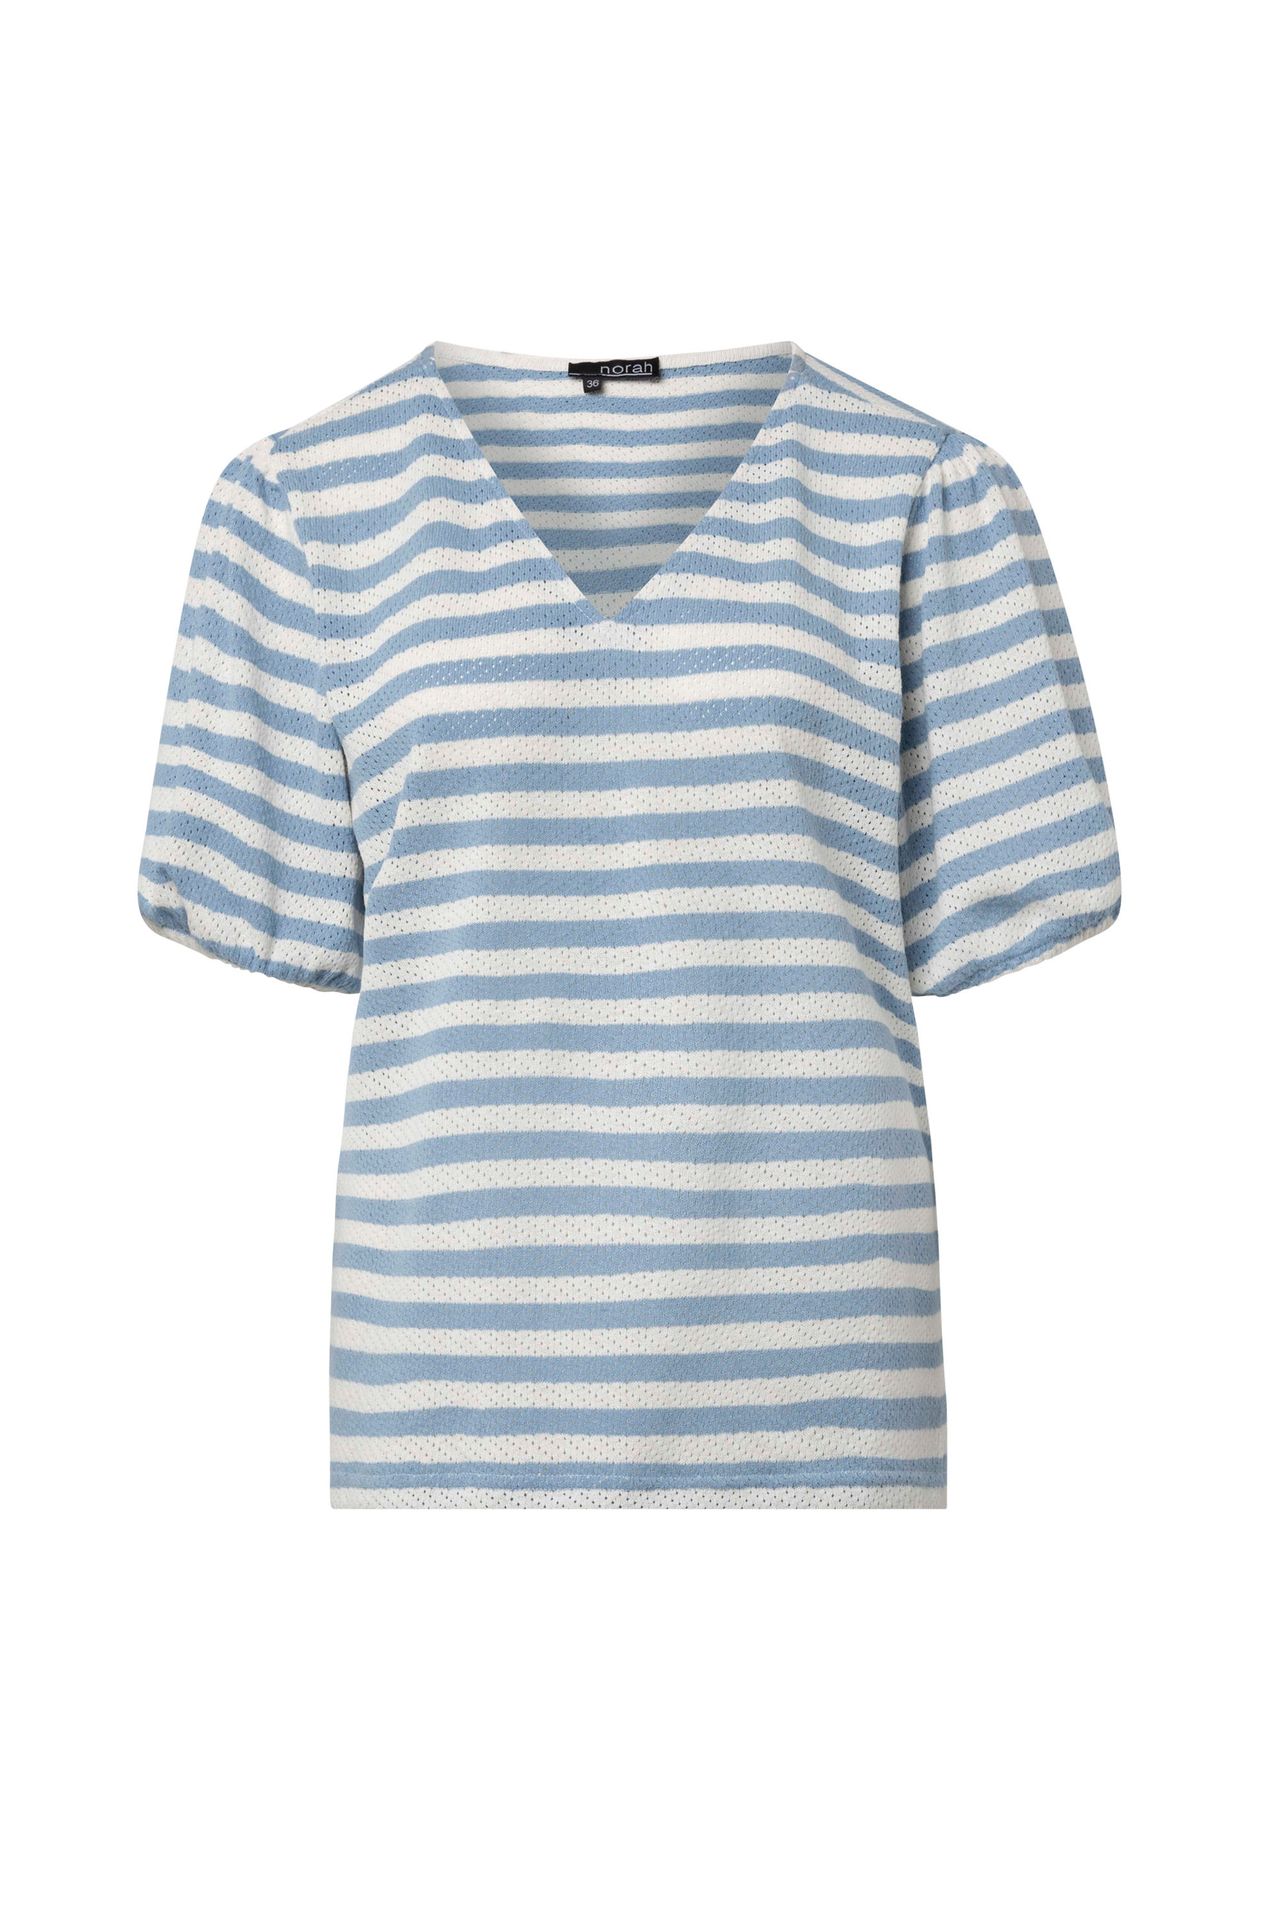 Norah Blauw gestreept shirt blue/white 214806-431